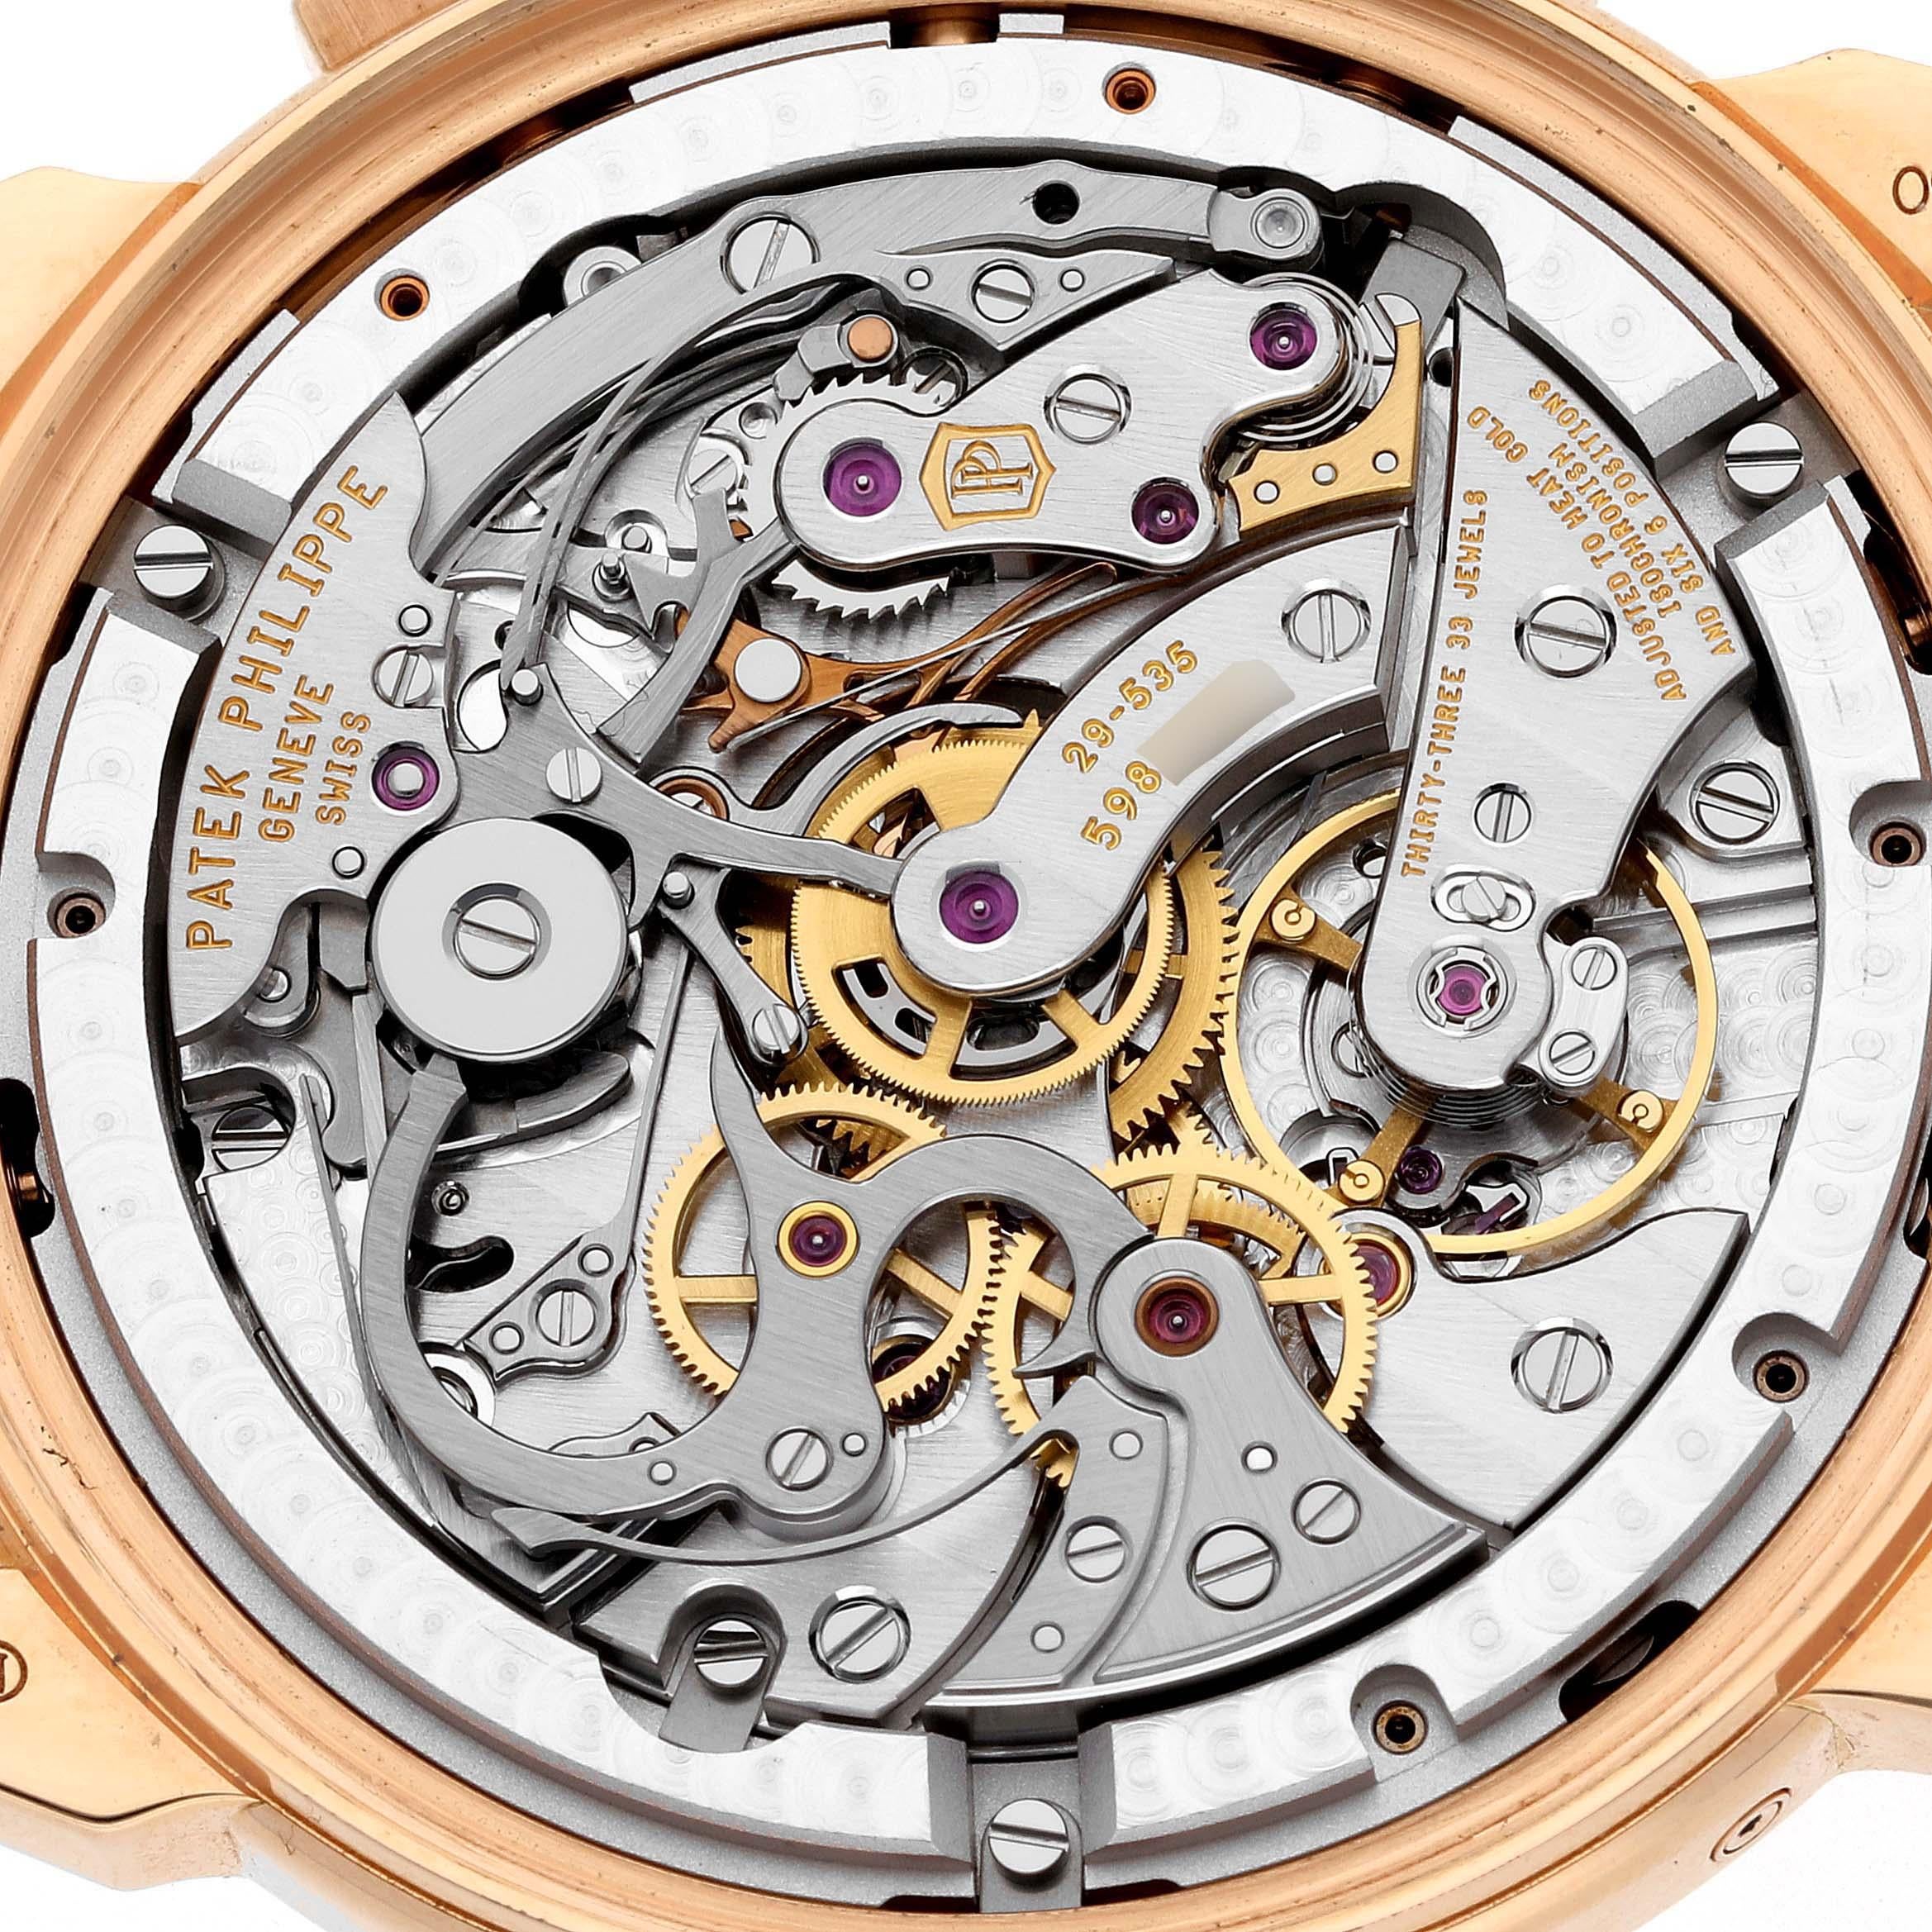 Patek Philippe Grand Complications Perpetual Calendar Rose Gold Watch 5270 5